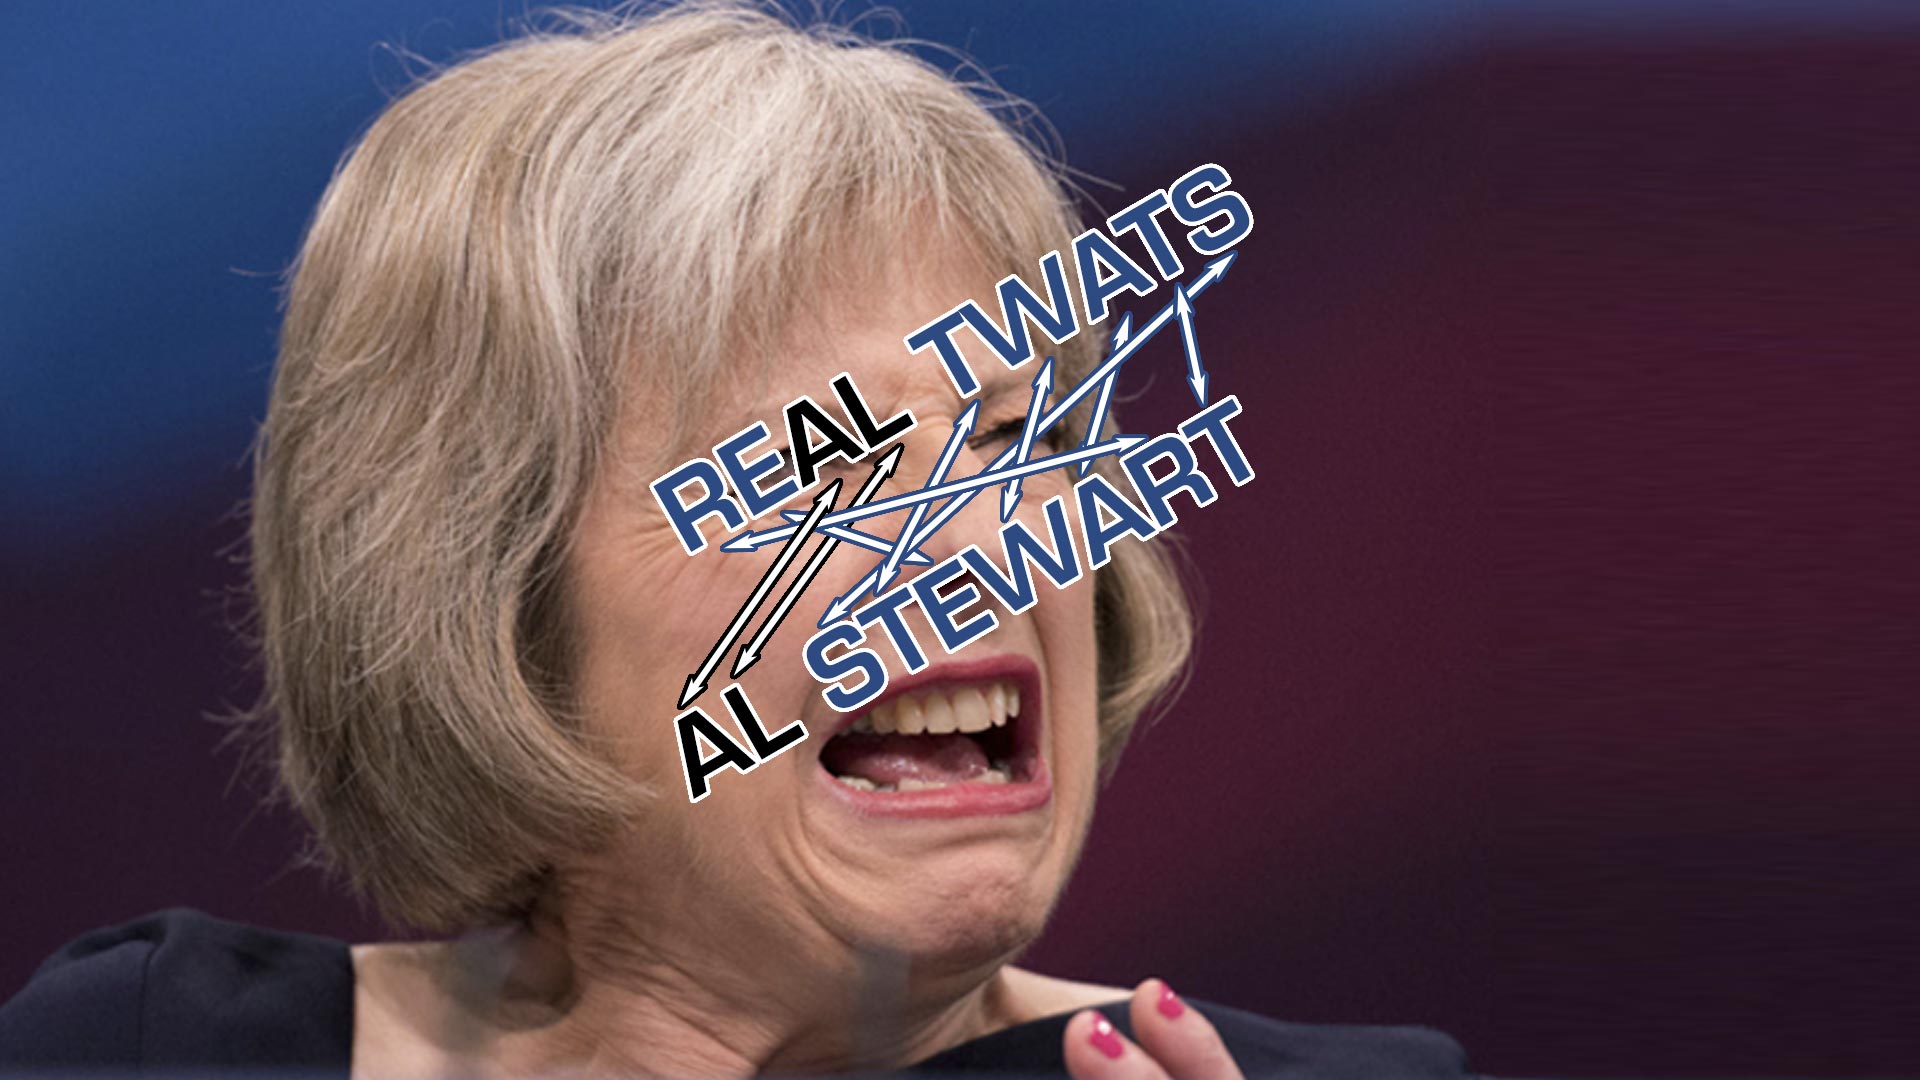 al.stewart